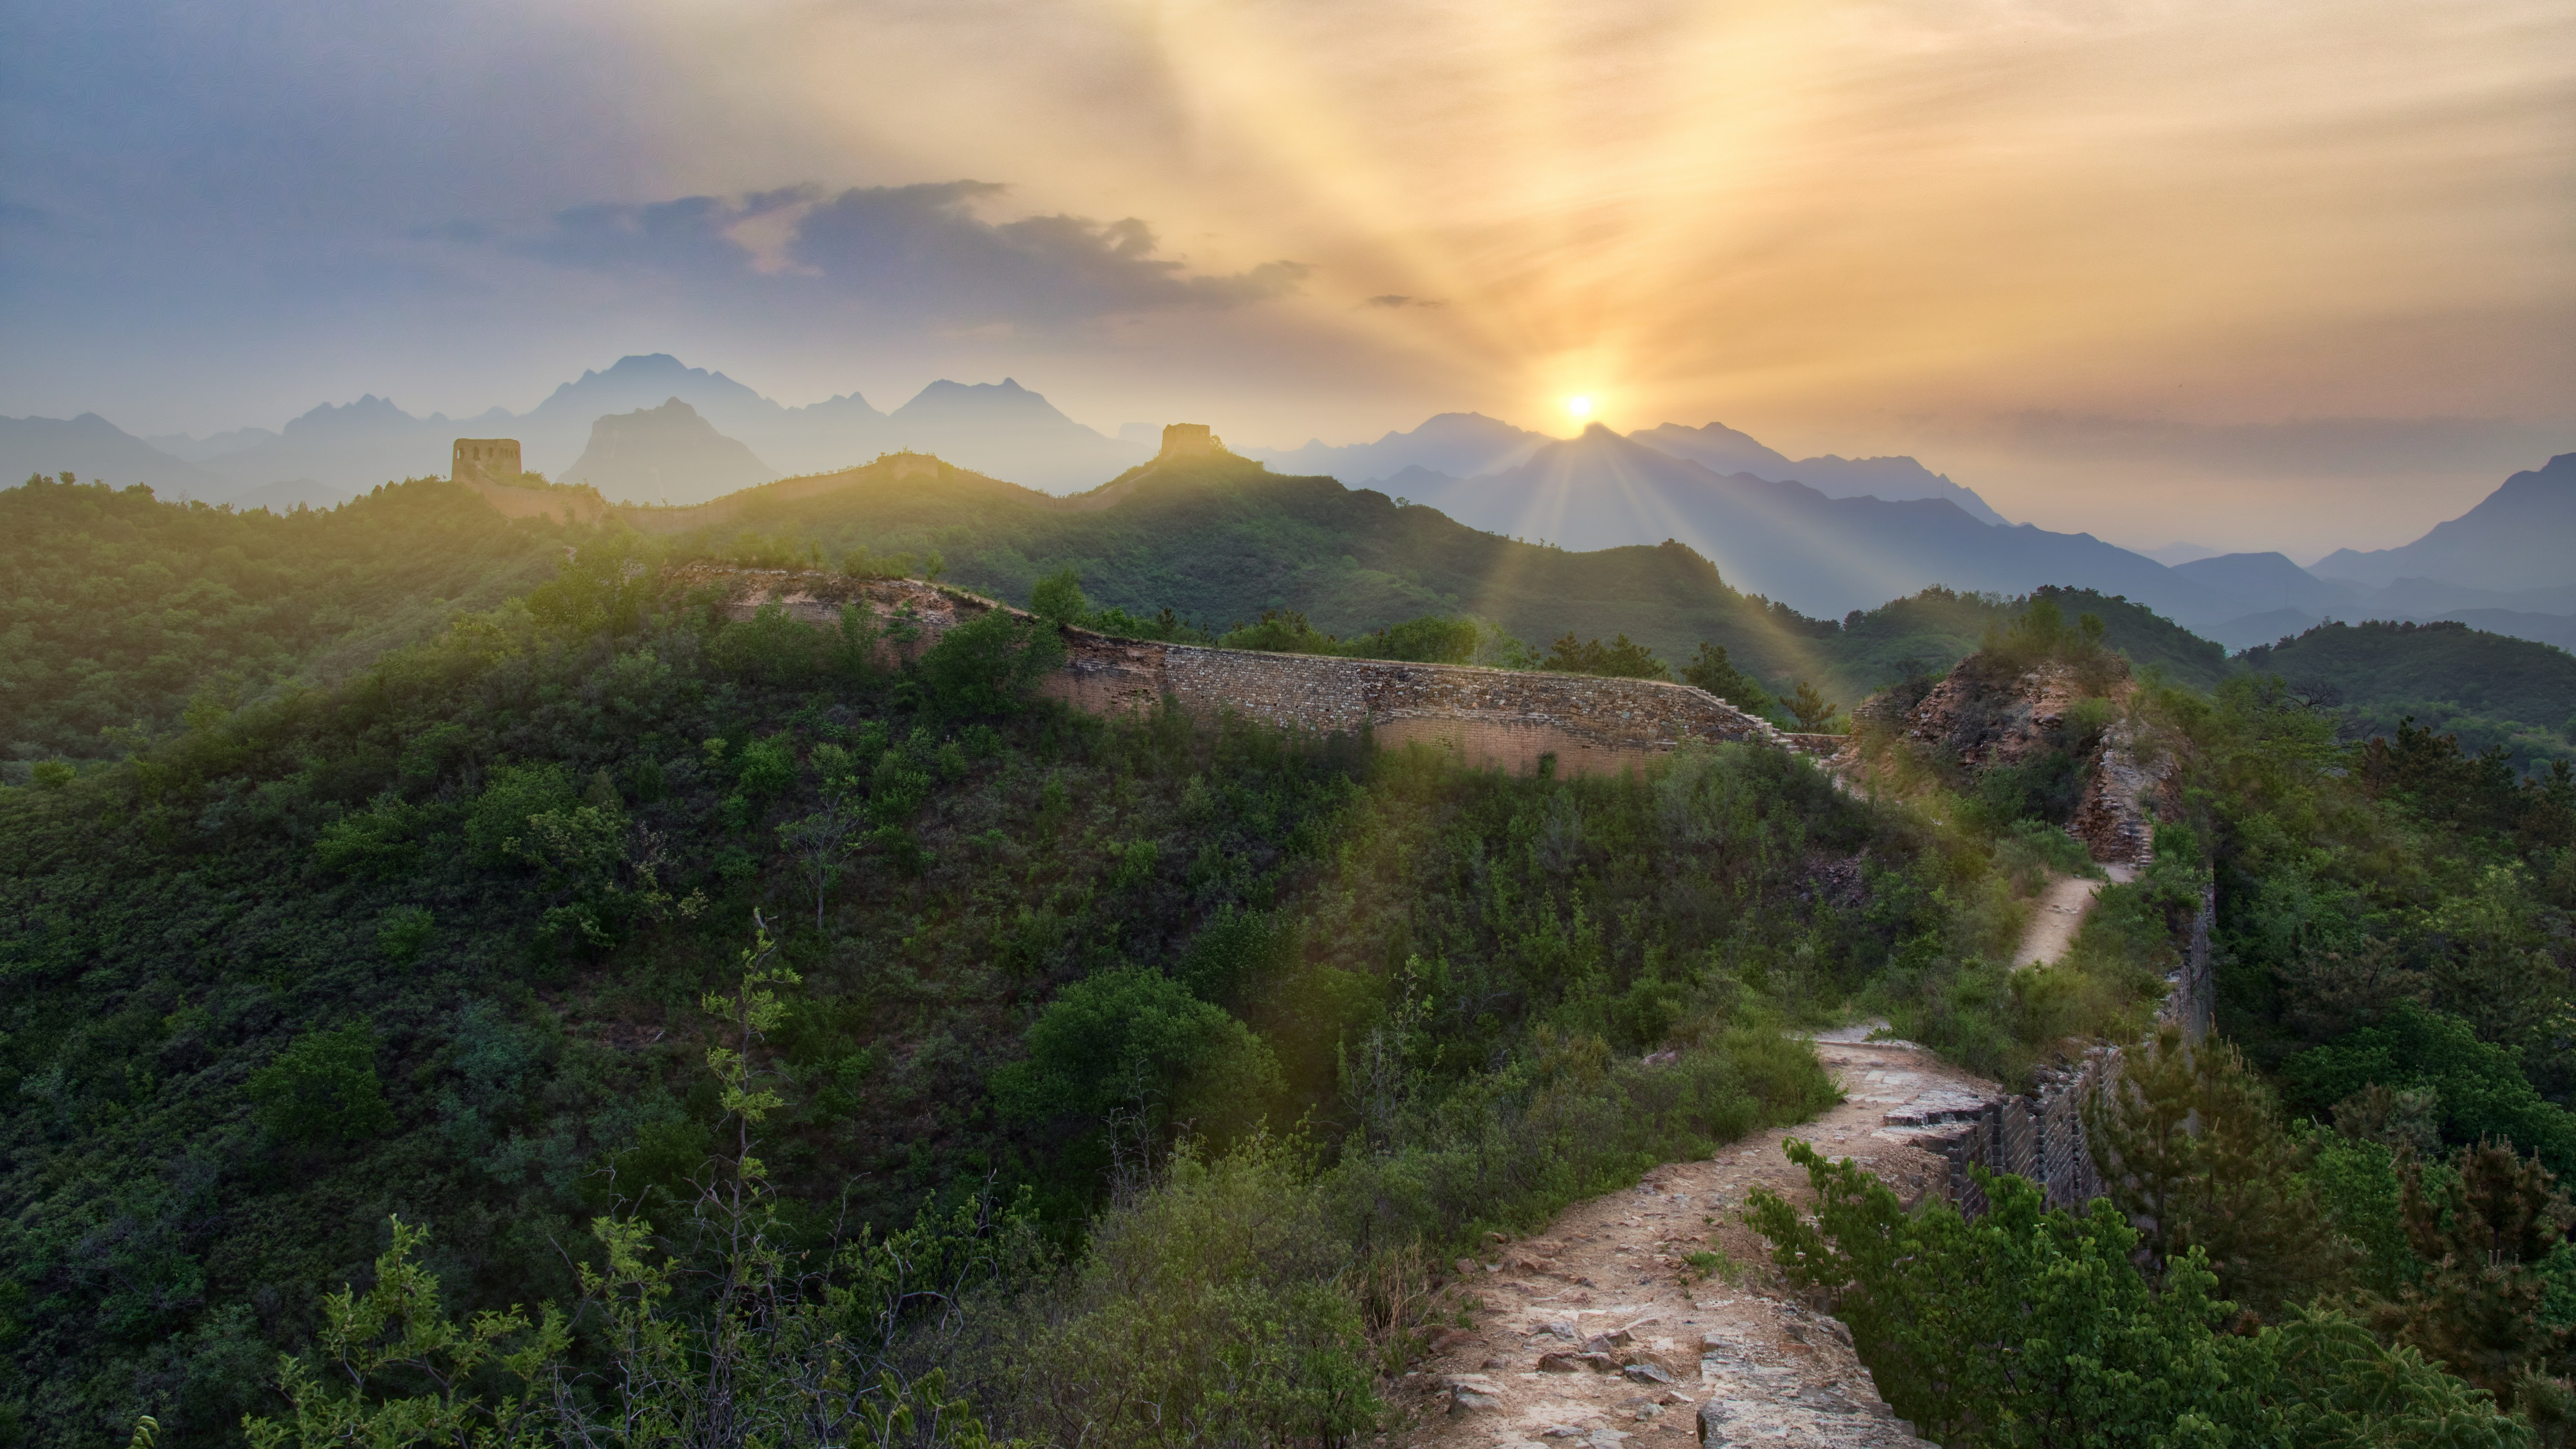 General 7680x4320 Trey Ratcliff photography China Beijing Great Wall of China nature Sun